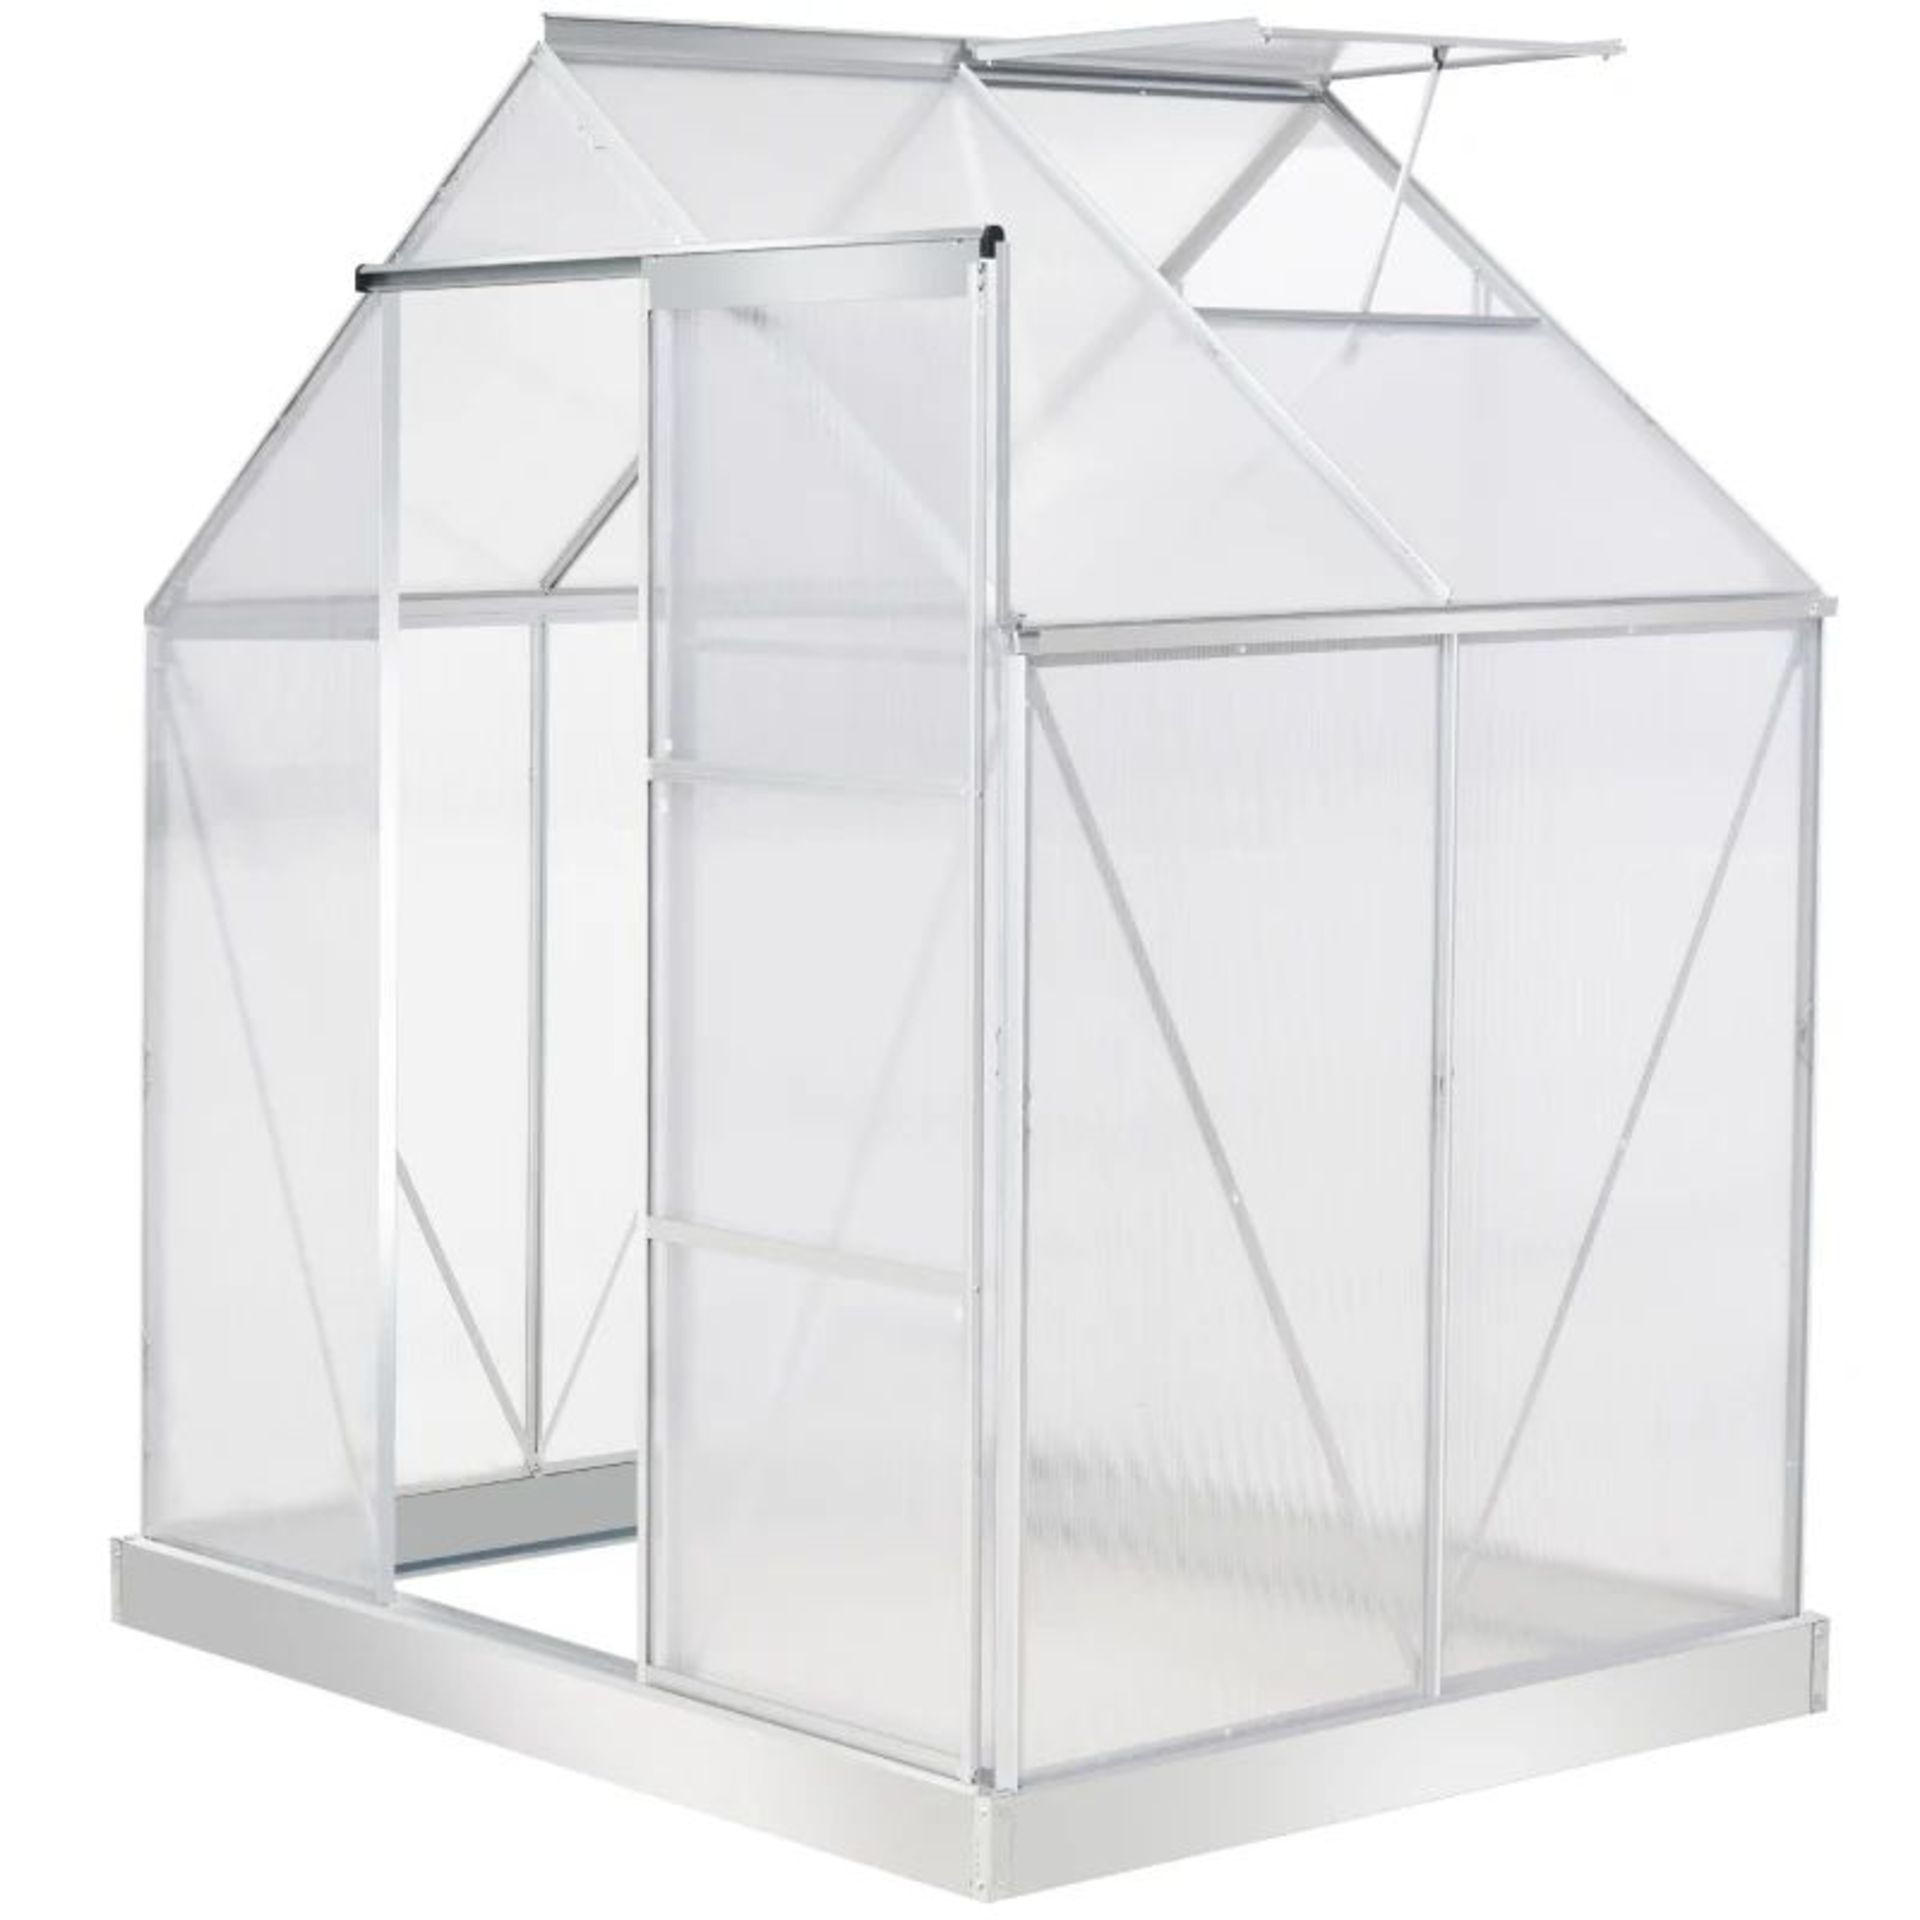 6 x 4 FT Walk-In Greenhouse Polycarbonate Panels Aluminium Frame w/ Sliding Door Adjustable Window